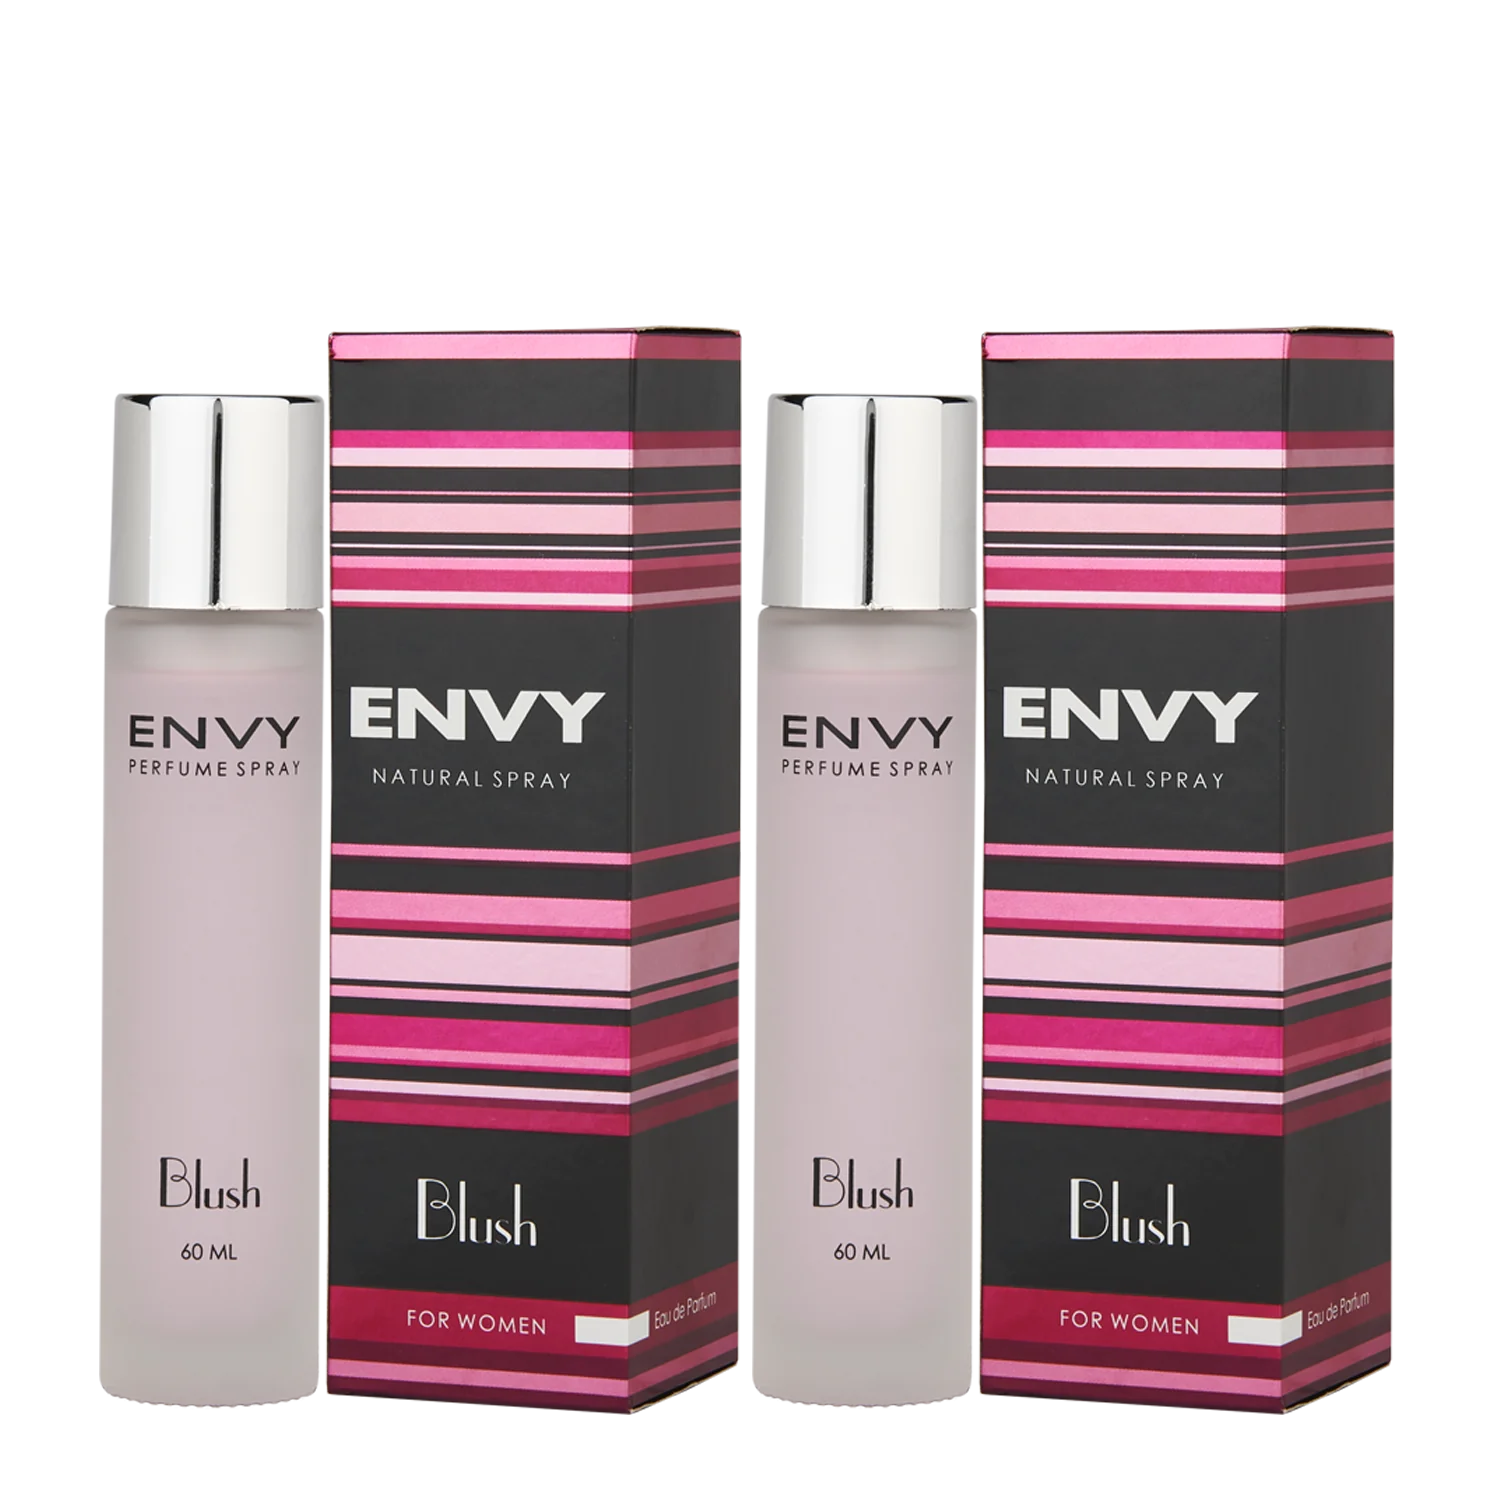 Envy Perfume Natural Spray Blush